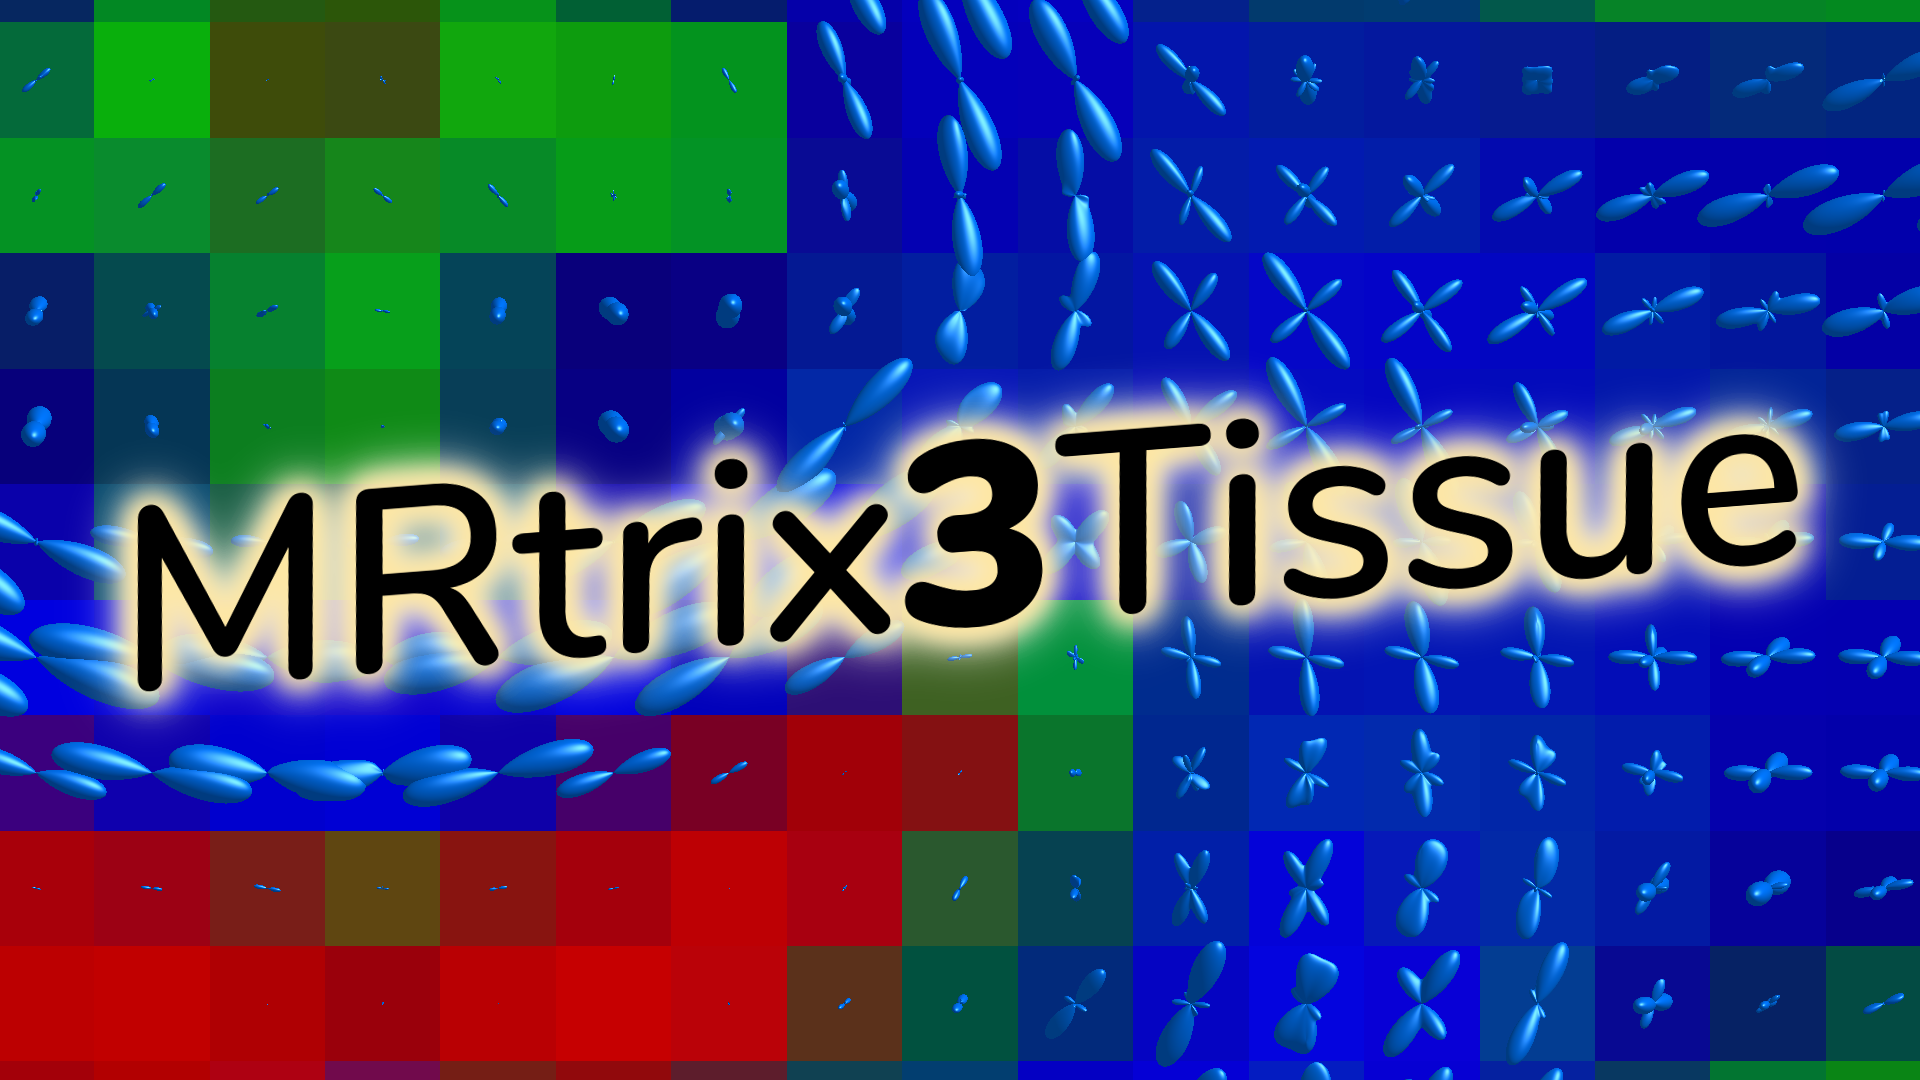 MRtrix3Tissue